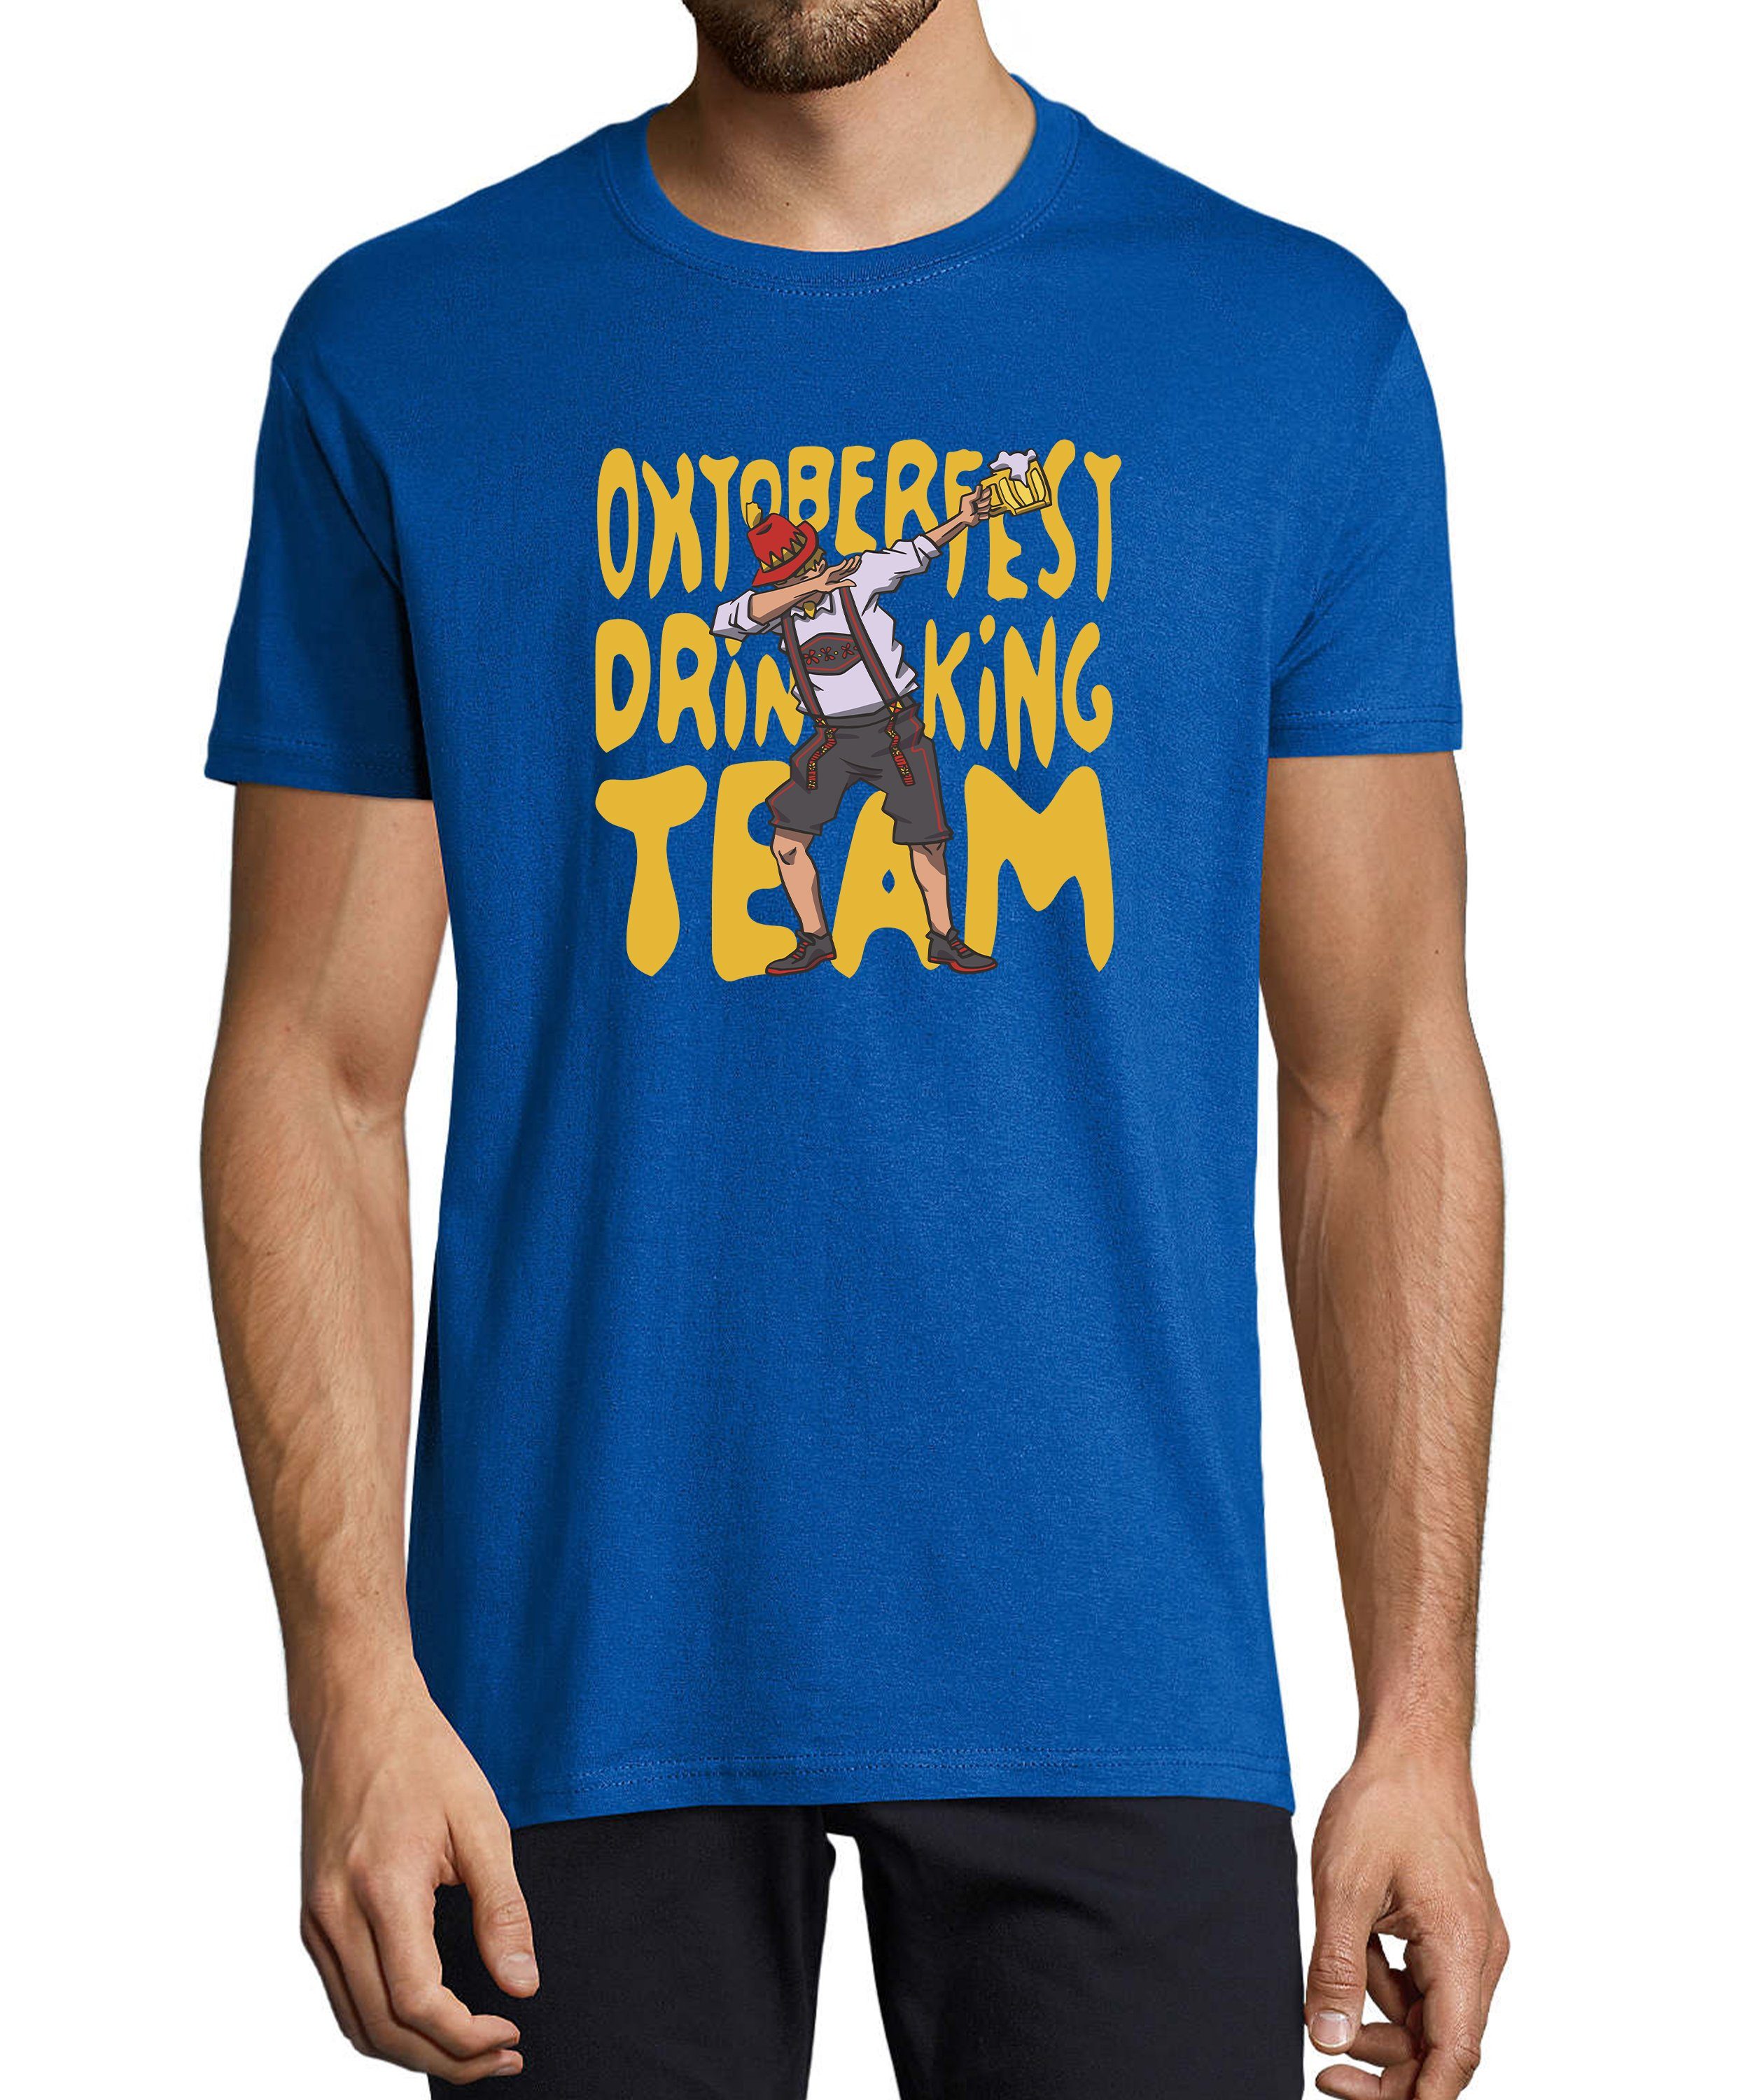 MyDesign24 T-Shirt Herren Fun Print Shirt - Oktoberfest T-Shirt Drinking Team Baumwollshirt mit Aufdruck Regular Fit, i305 royal blau